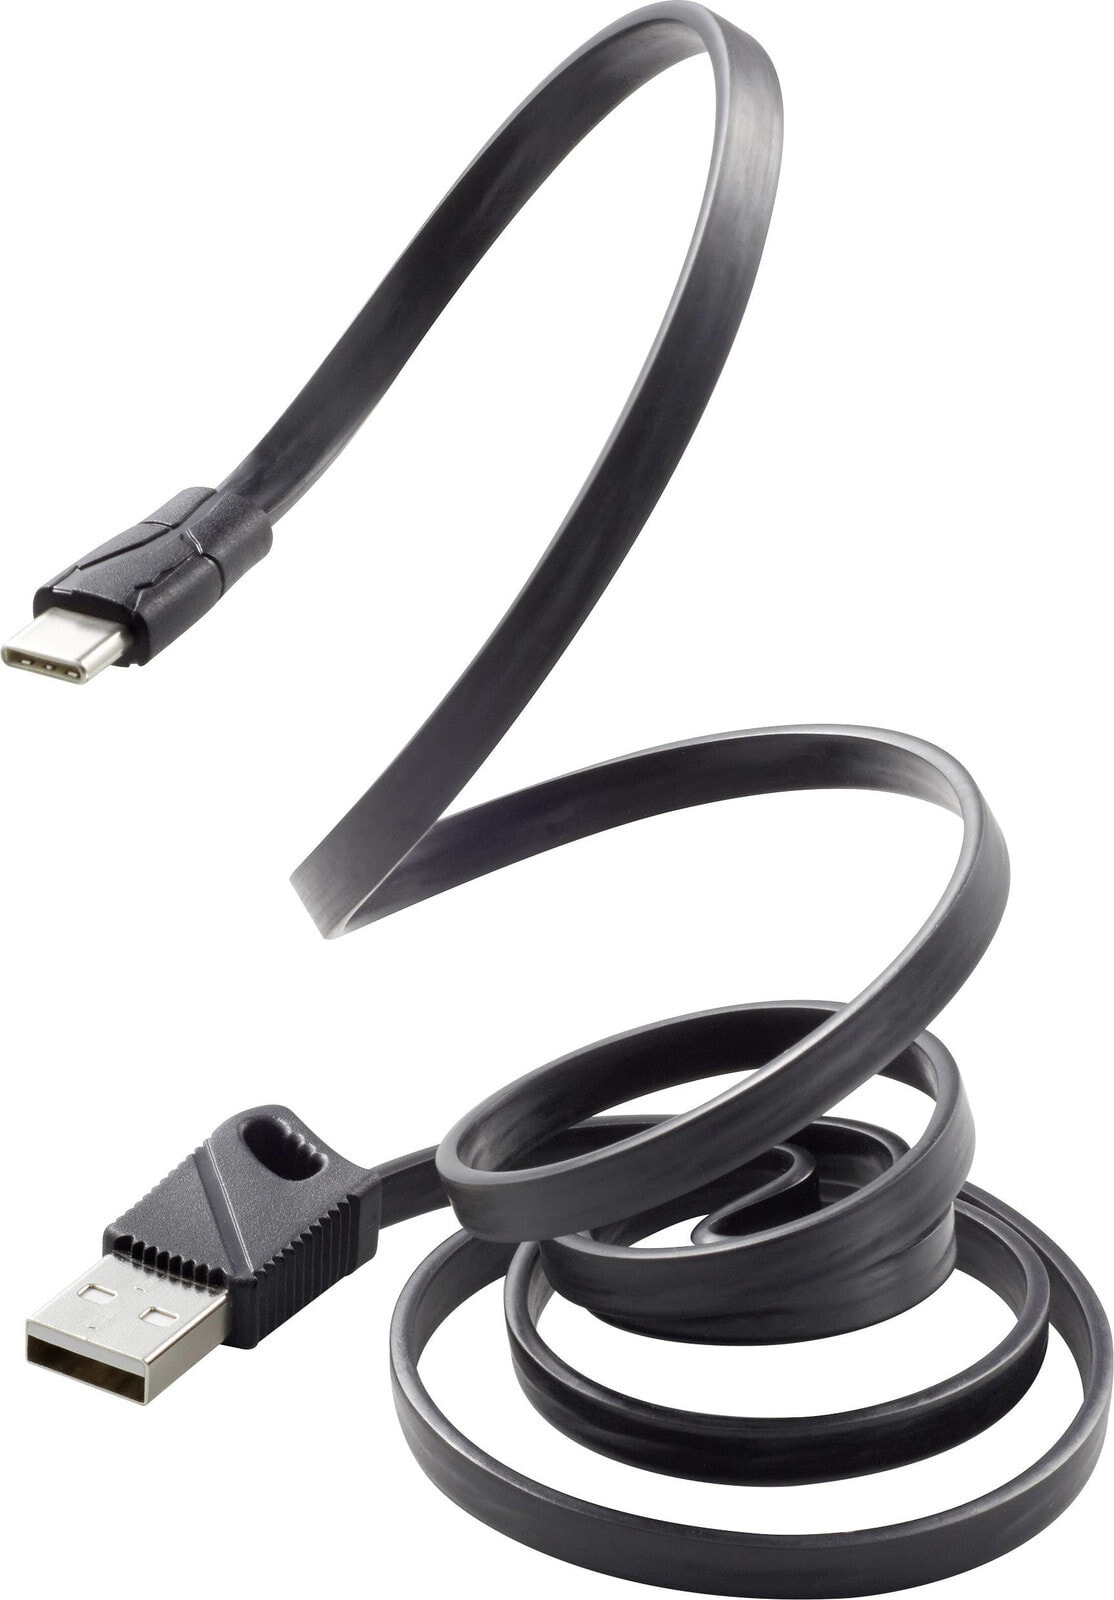 RF-3376014 - 1 m - USB A - USB C - USB 2.0 - 480 Mbit/s - Black